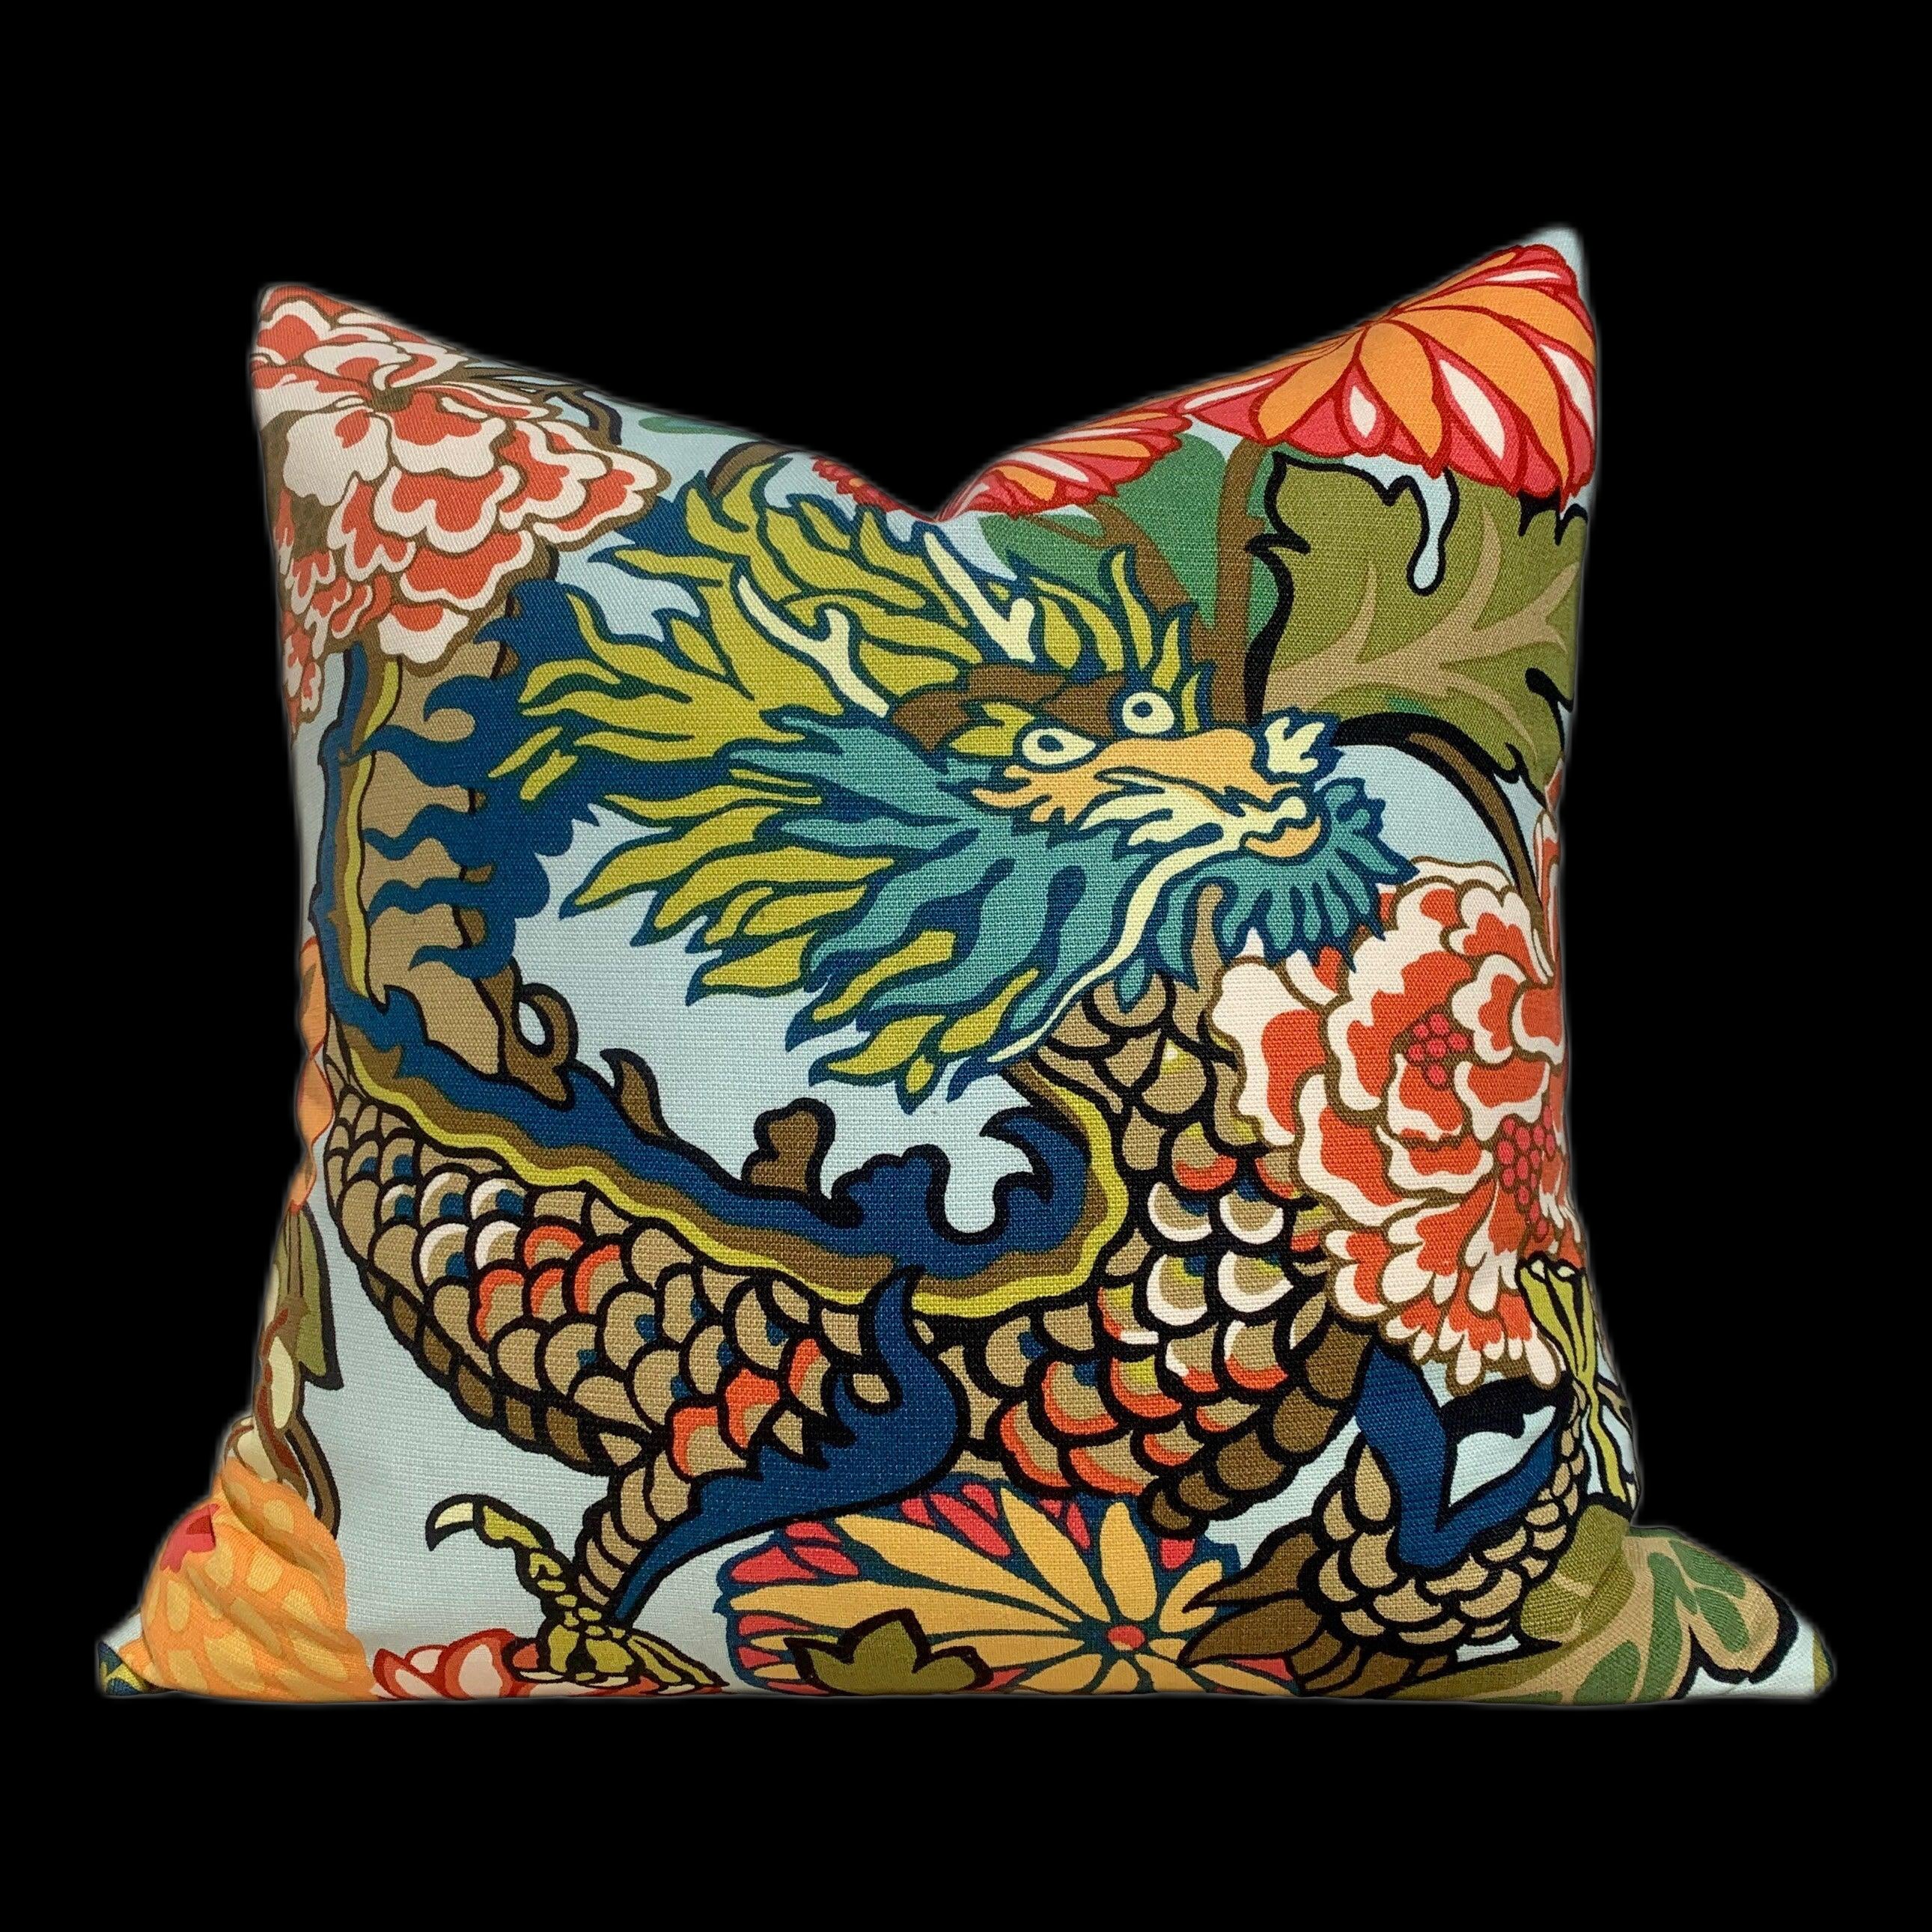 Schumacher Chang Mai Dragon Pillow in Aquamarine. Chinoiserie Accent Lumbar Linen Pillow, Aqua Blue Dragon Cushion Cover, Animal Print Decor